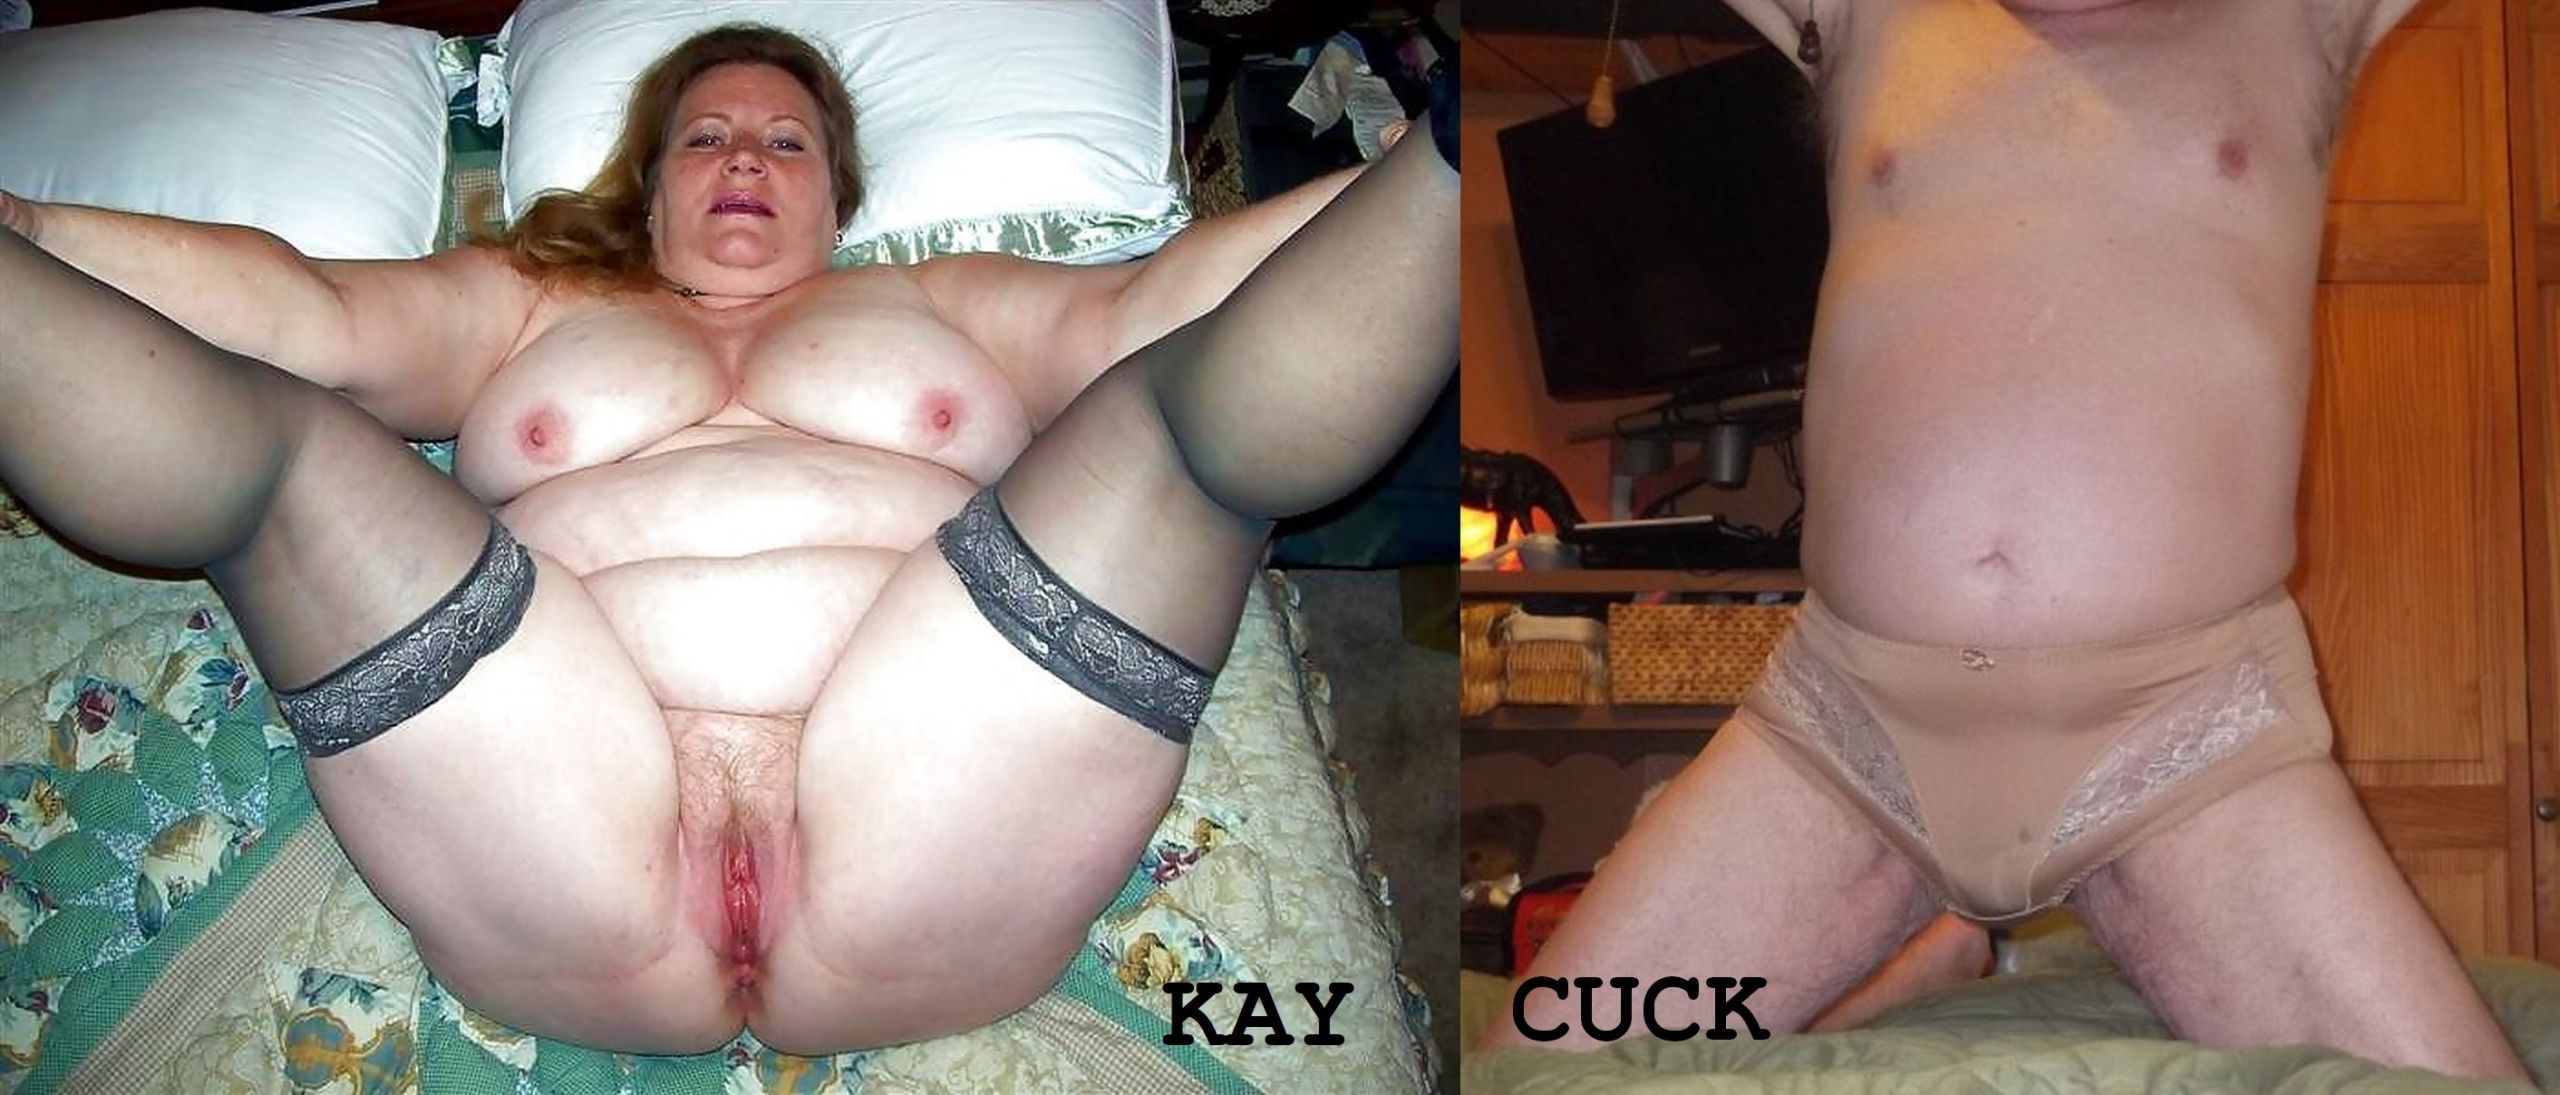 Kay and cuck